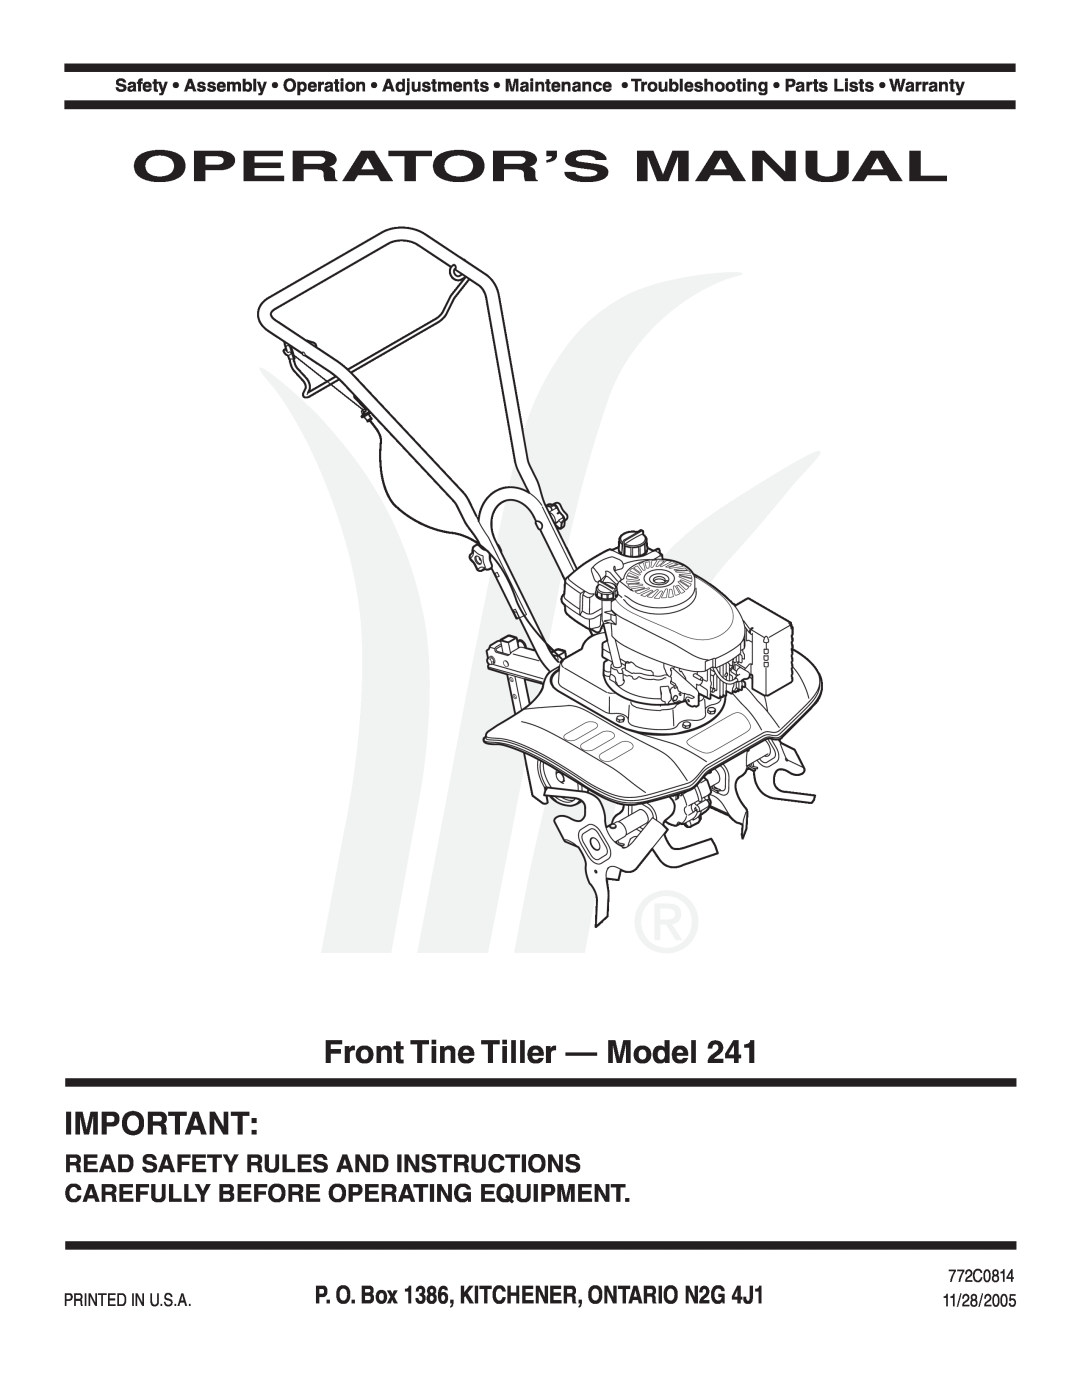 Bolens 241 warranty Operator’S Manual, Front Tine Tiller - Model, P. O. Box 1386, KITCHENER, ONTARIO N2G 4J1 